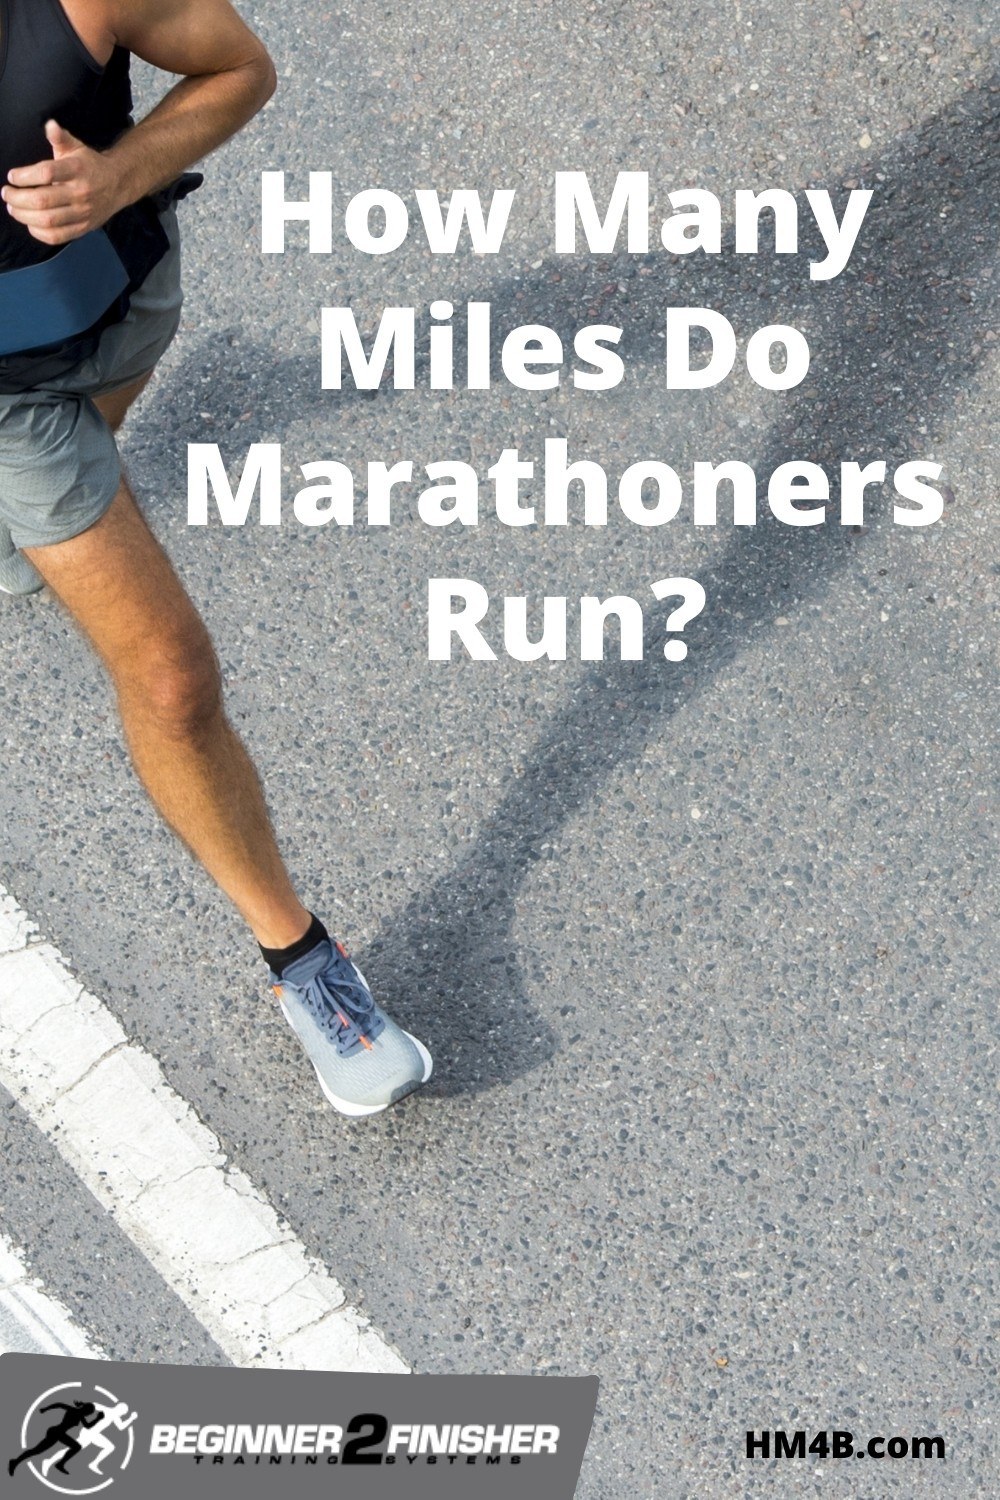 How Many Miles (Kilometers) do Marathoners Run?